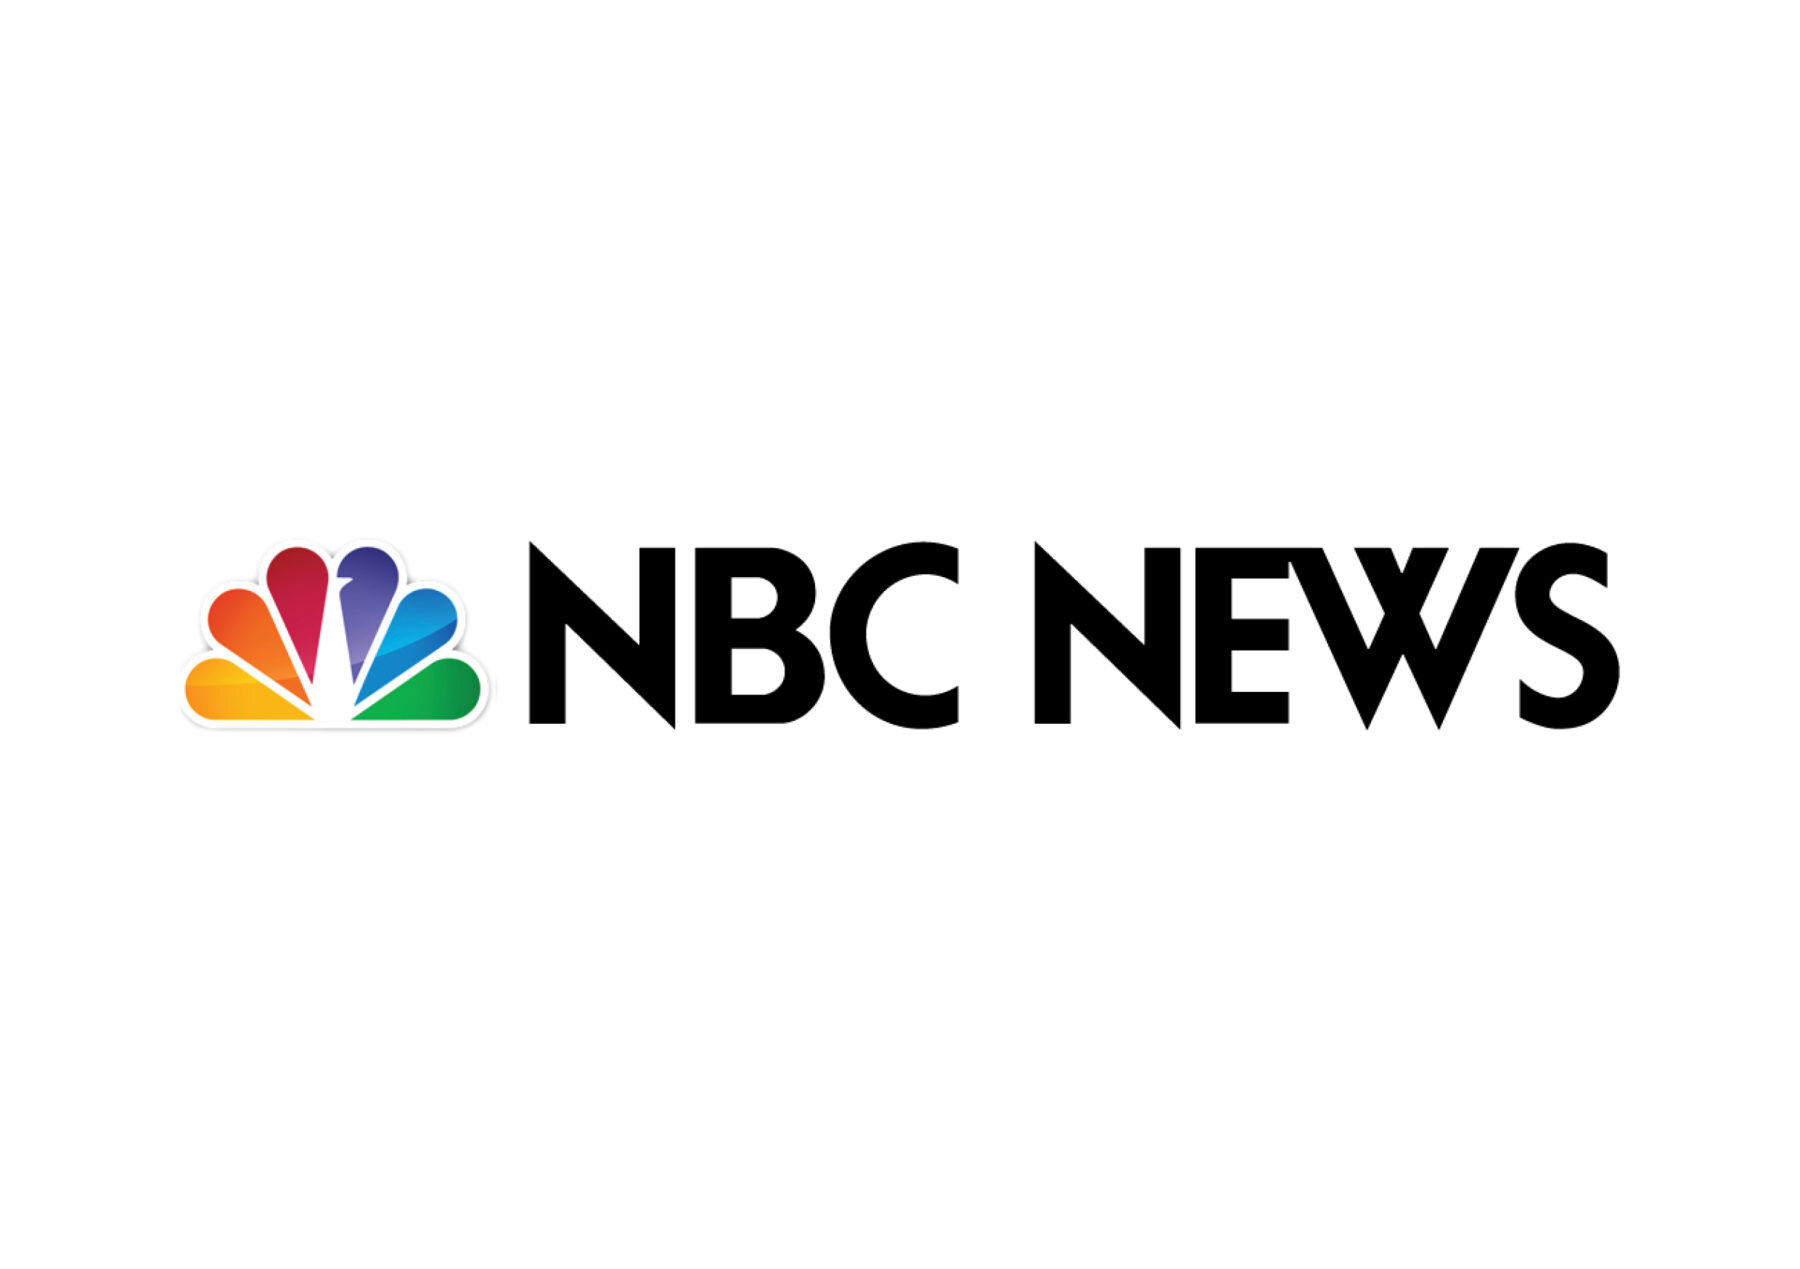 NBC news logo 2020.jpg